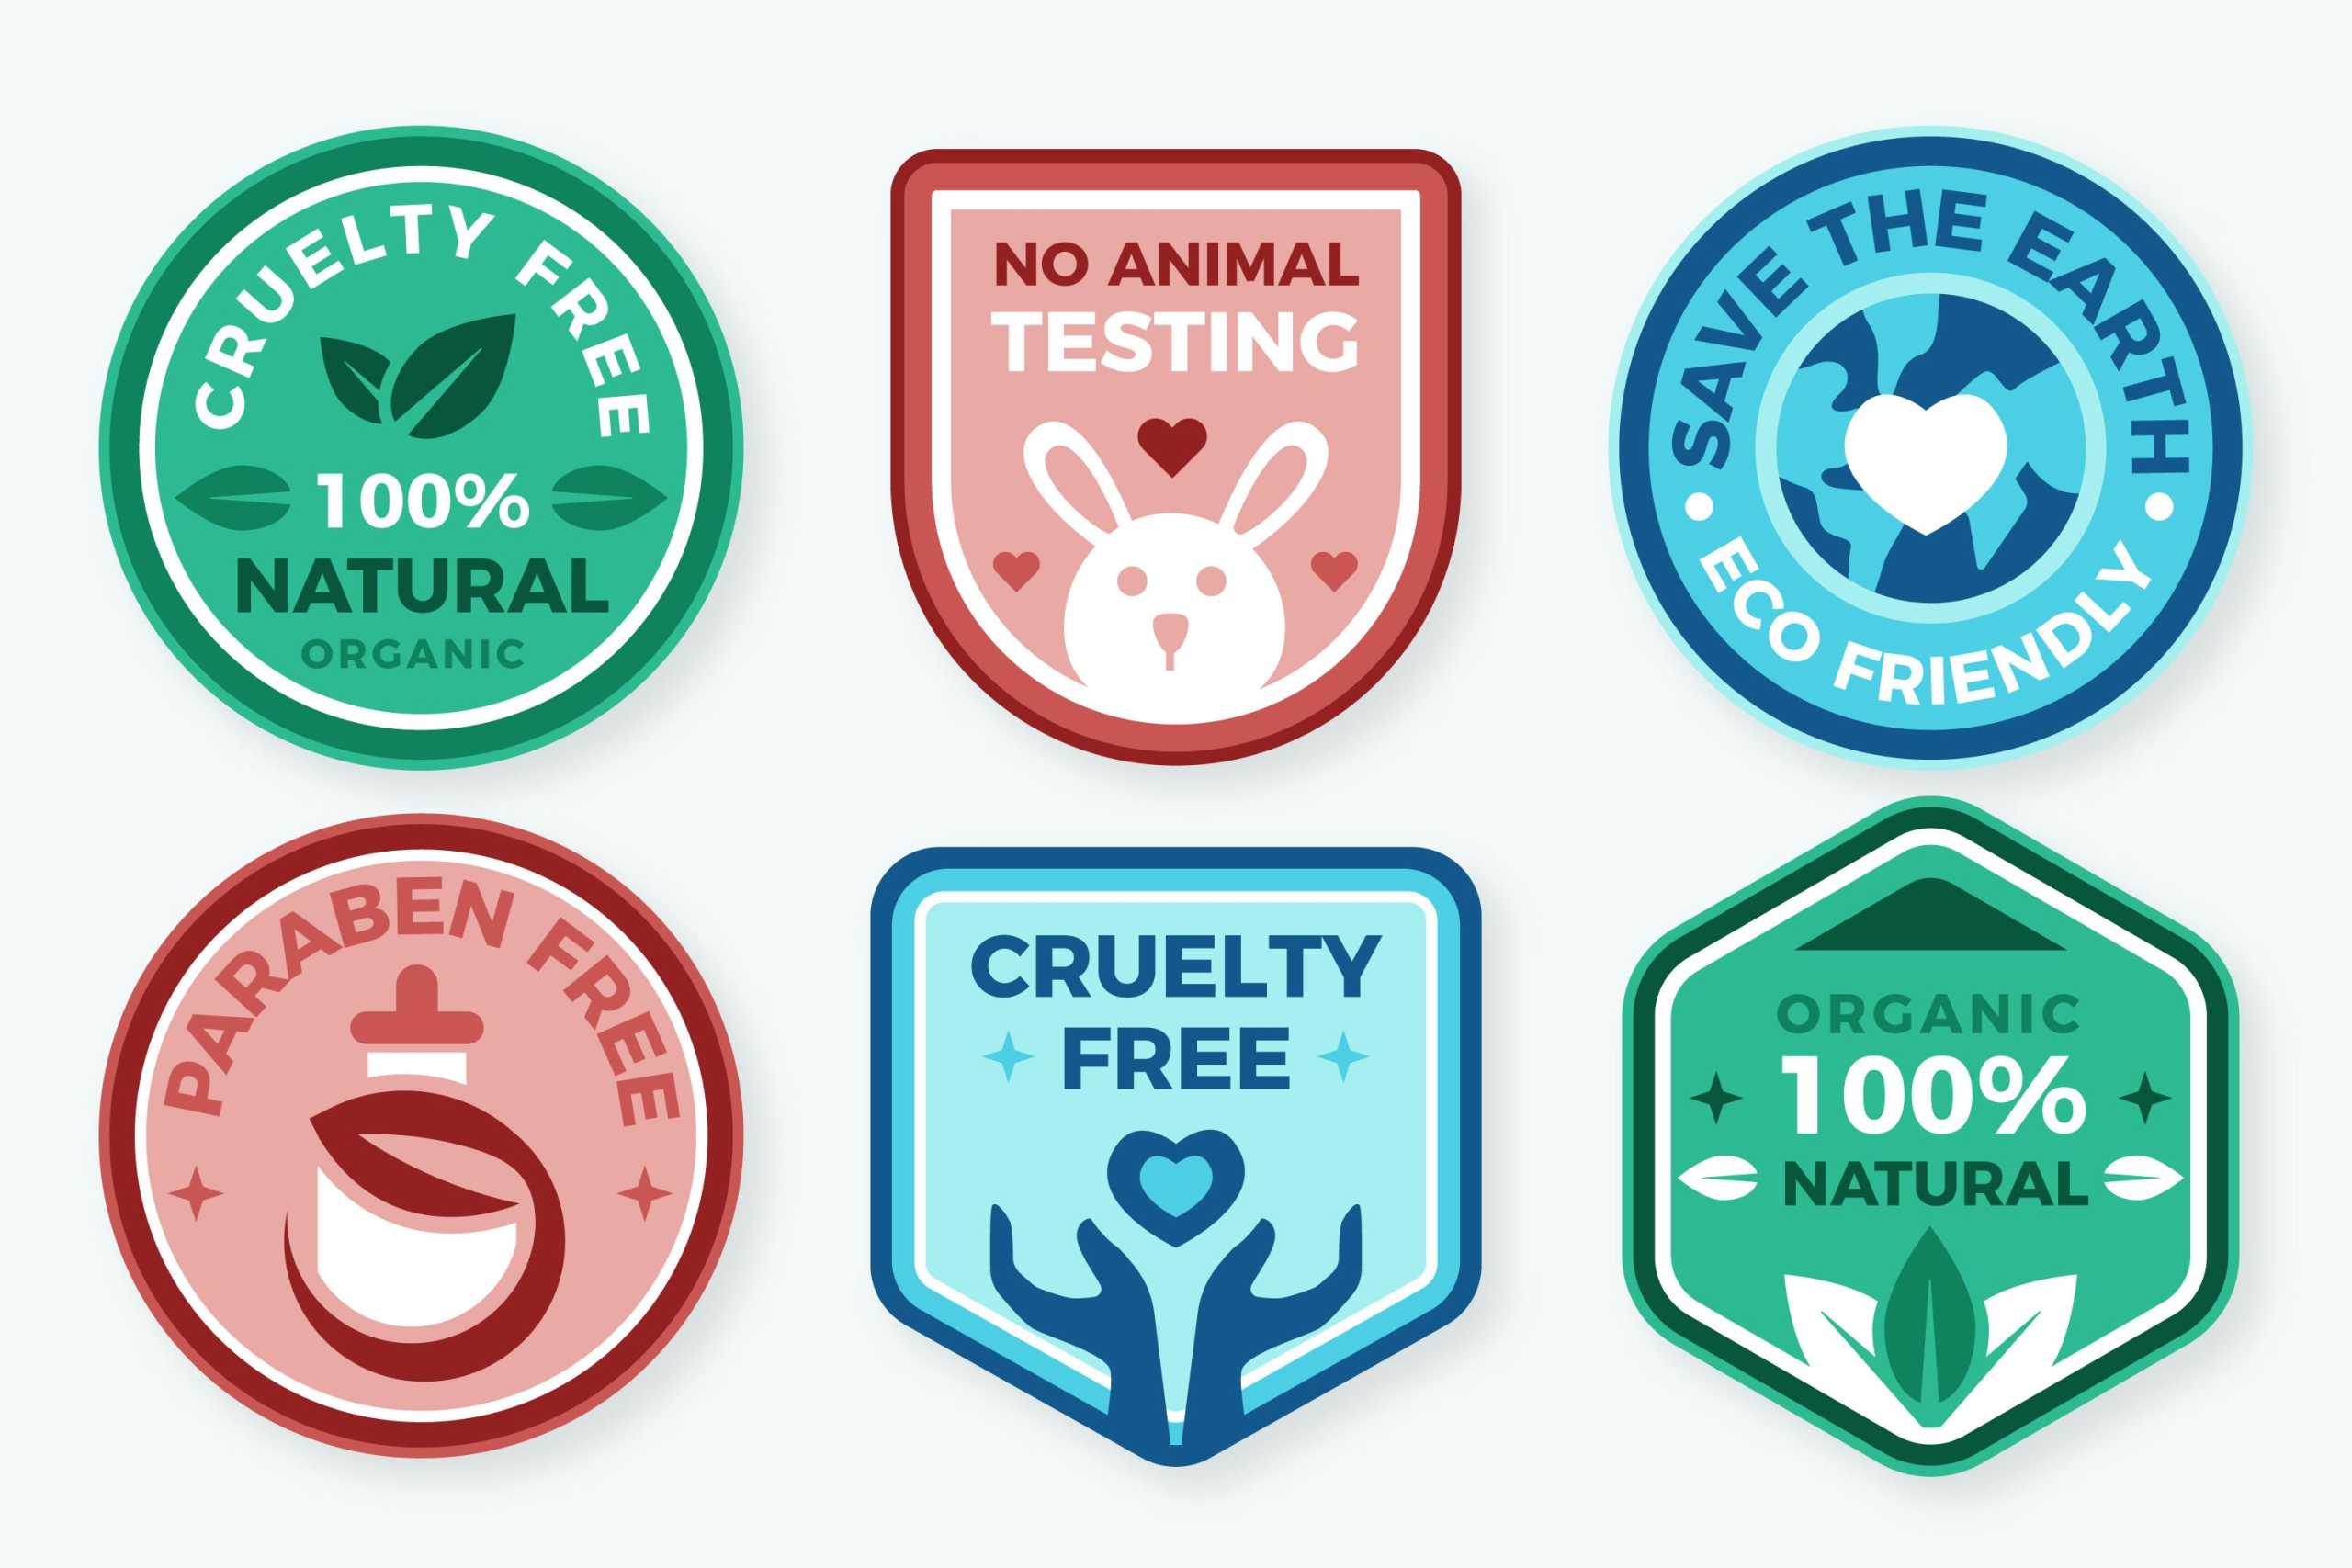 Badges representing sustainability